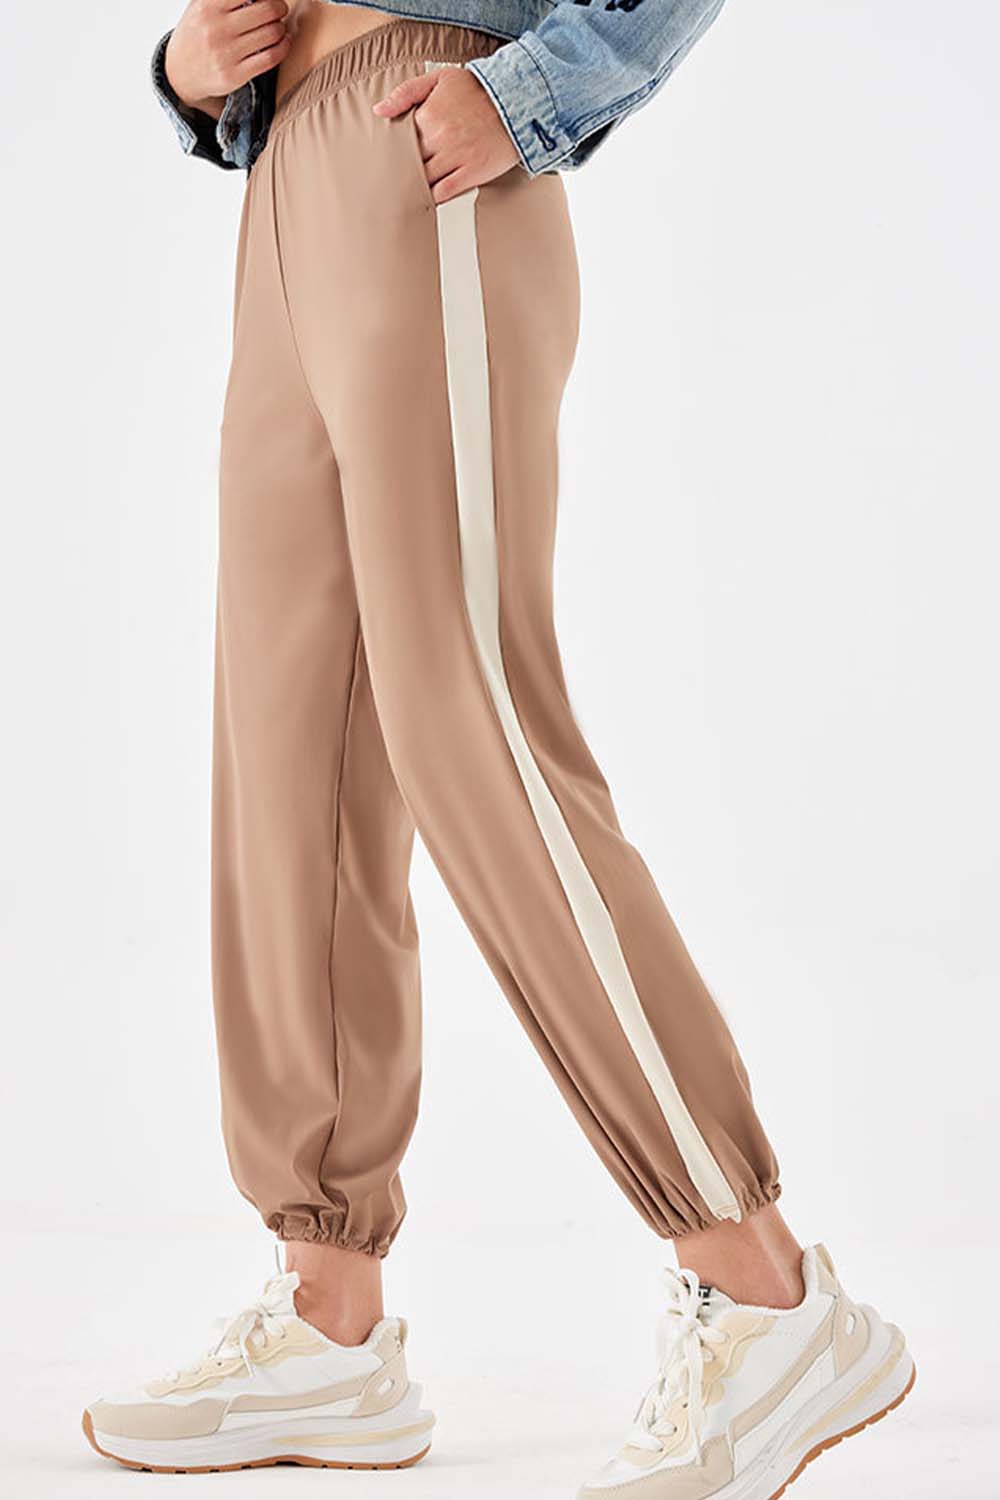 Seam Detail Long Pants - Brown / S - Bottoms - Pants - 4 - 2024